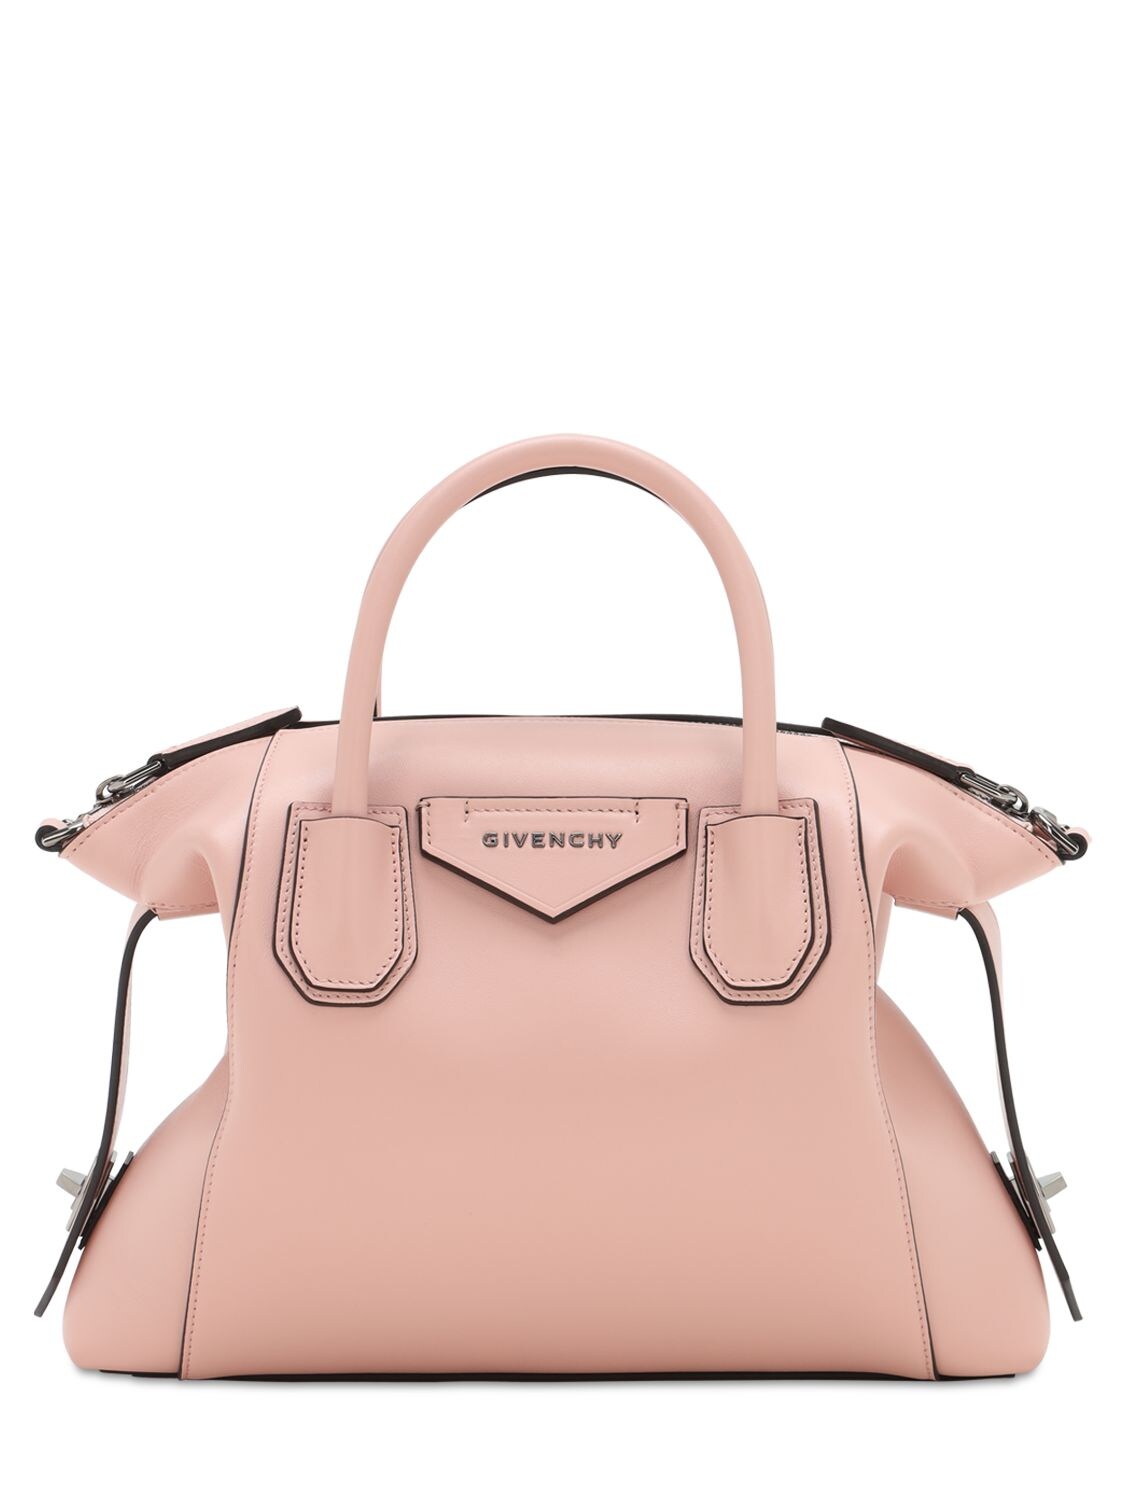 Givenchy Antigona Small Leather Bag In Pink | ModeSens